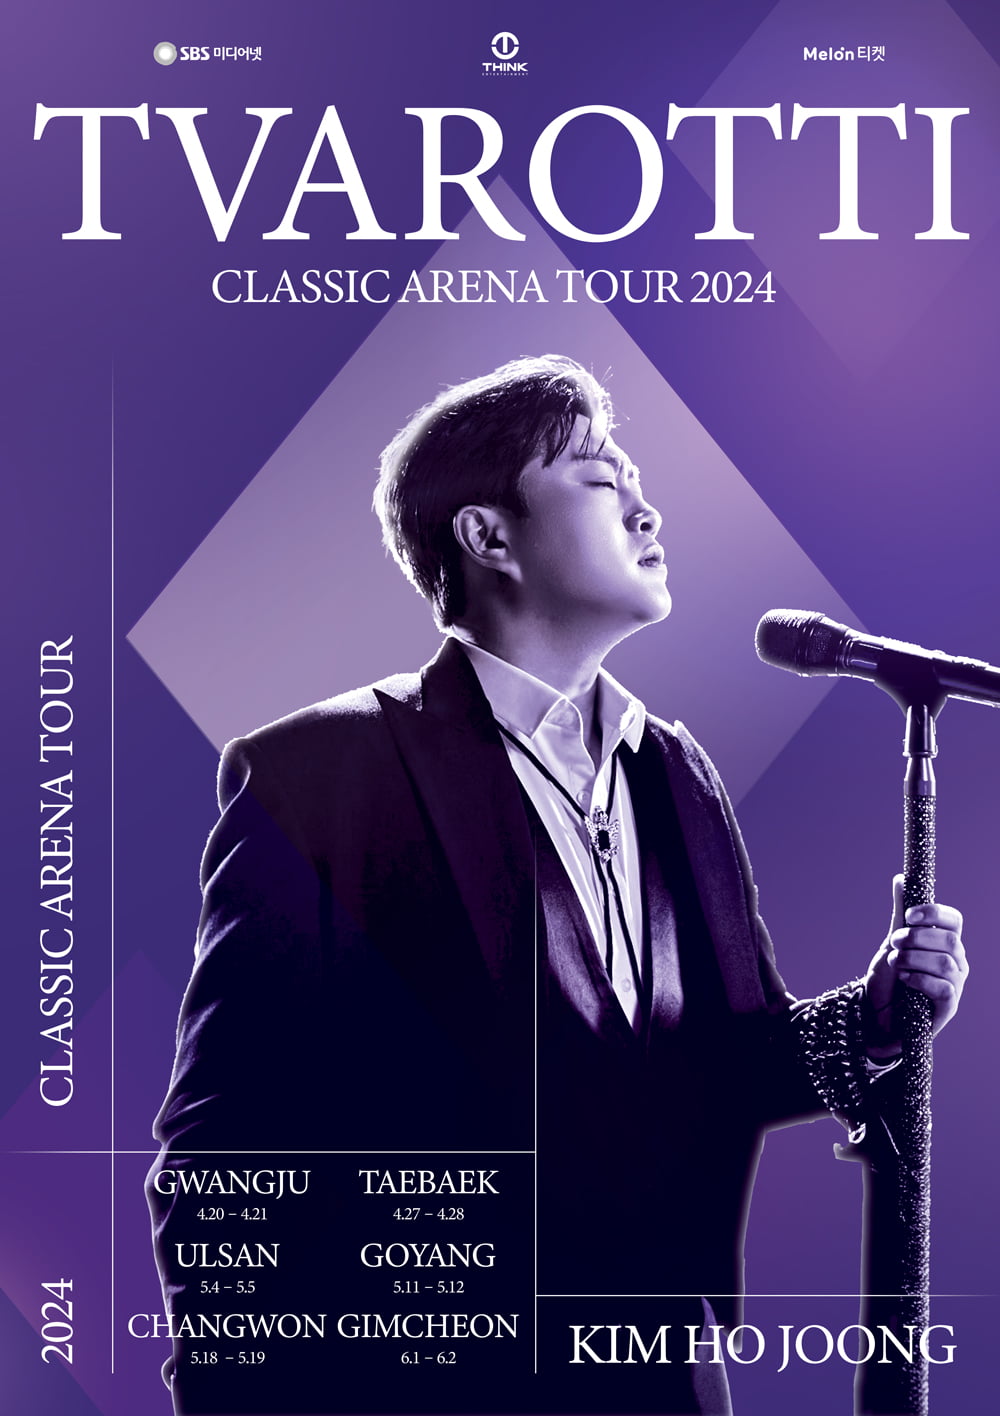 Kim Ho-jung's 'Tvarotti Classic Arena Tour 2024' Gwangju performance tickets open today (8th)